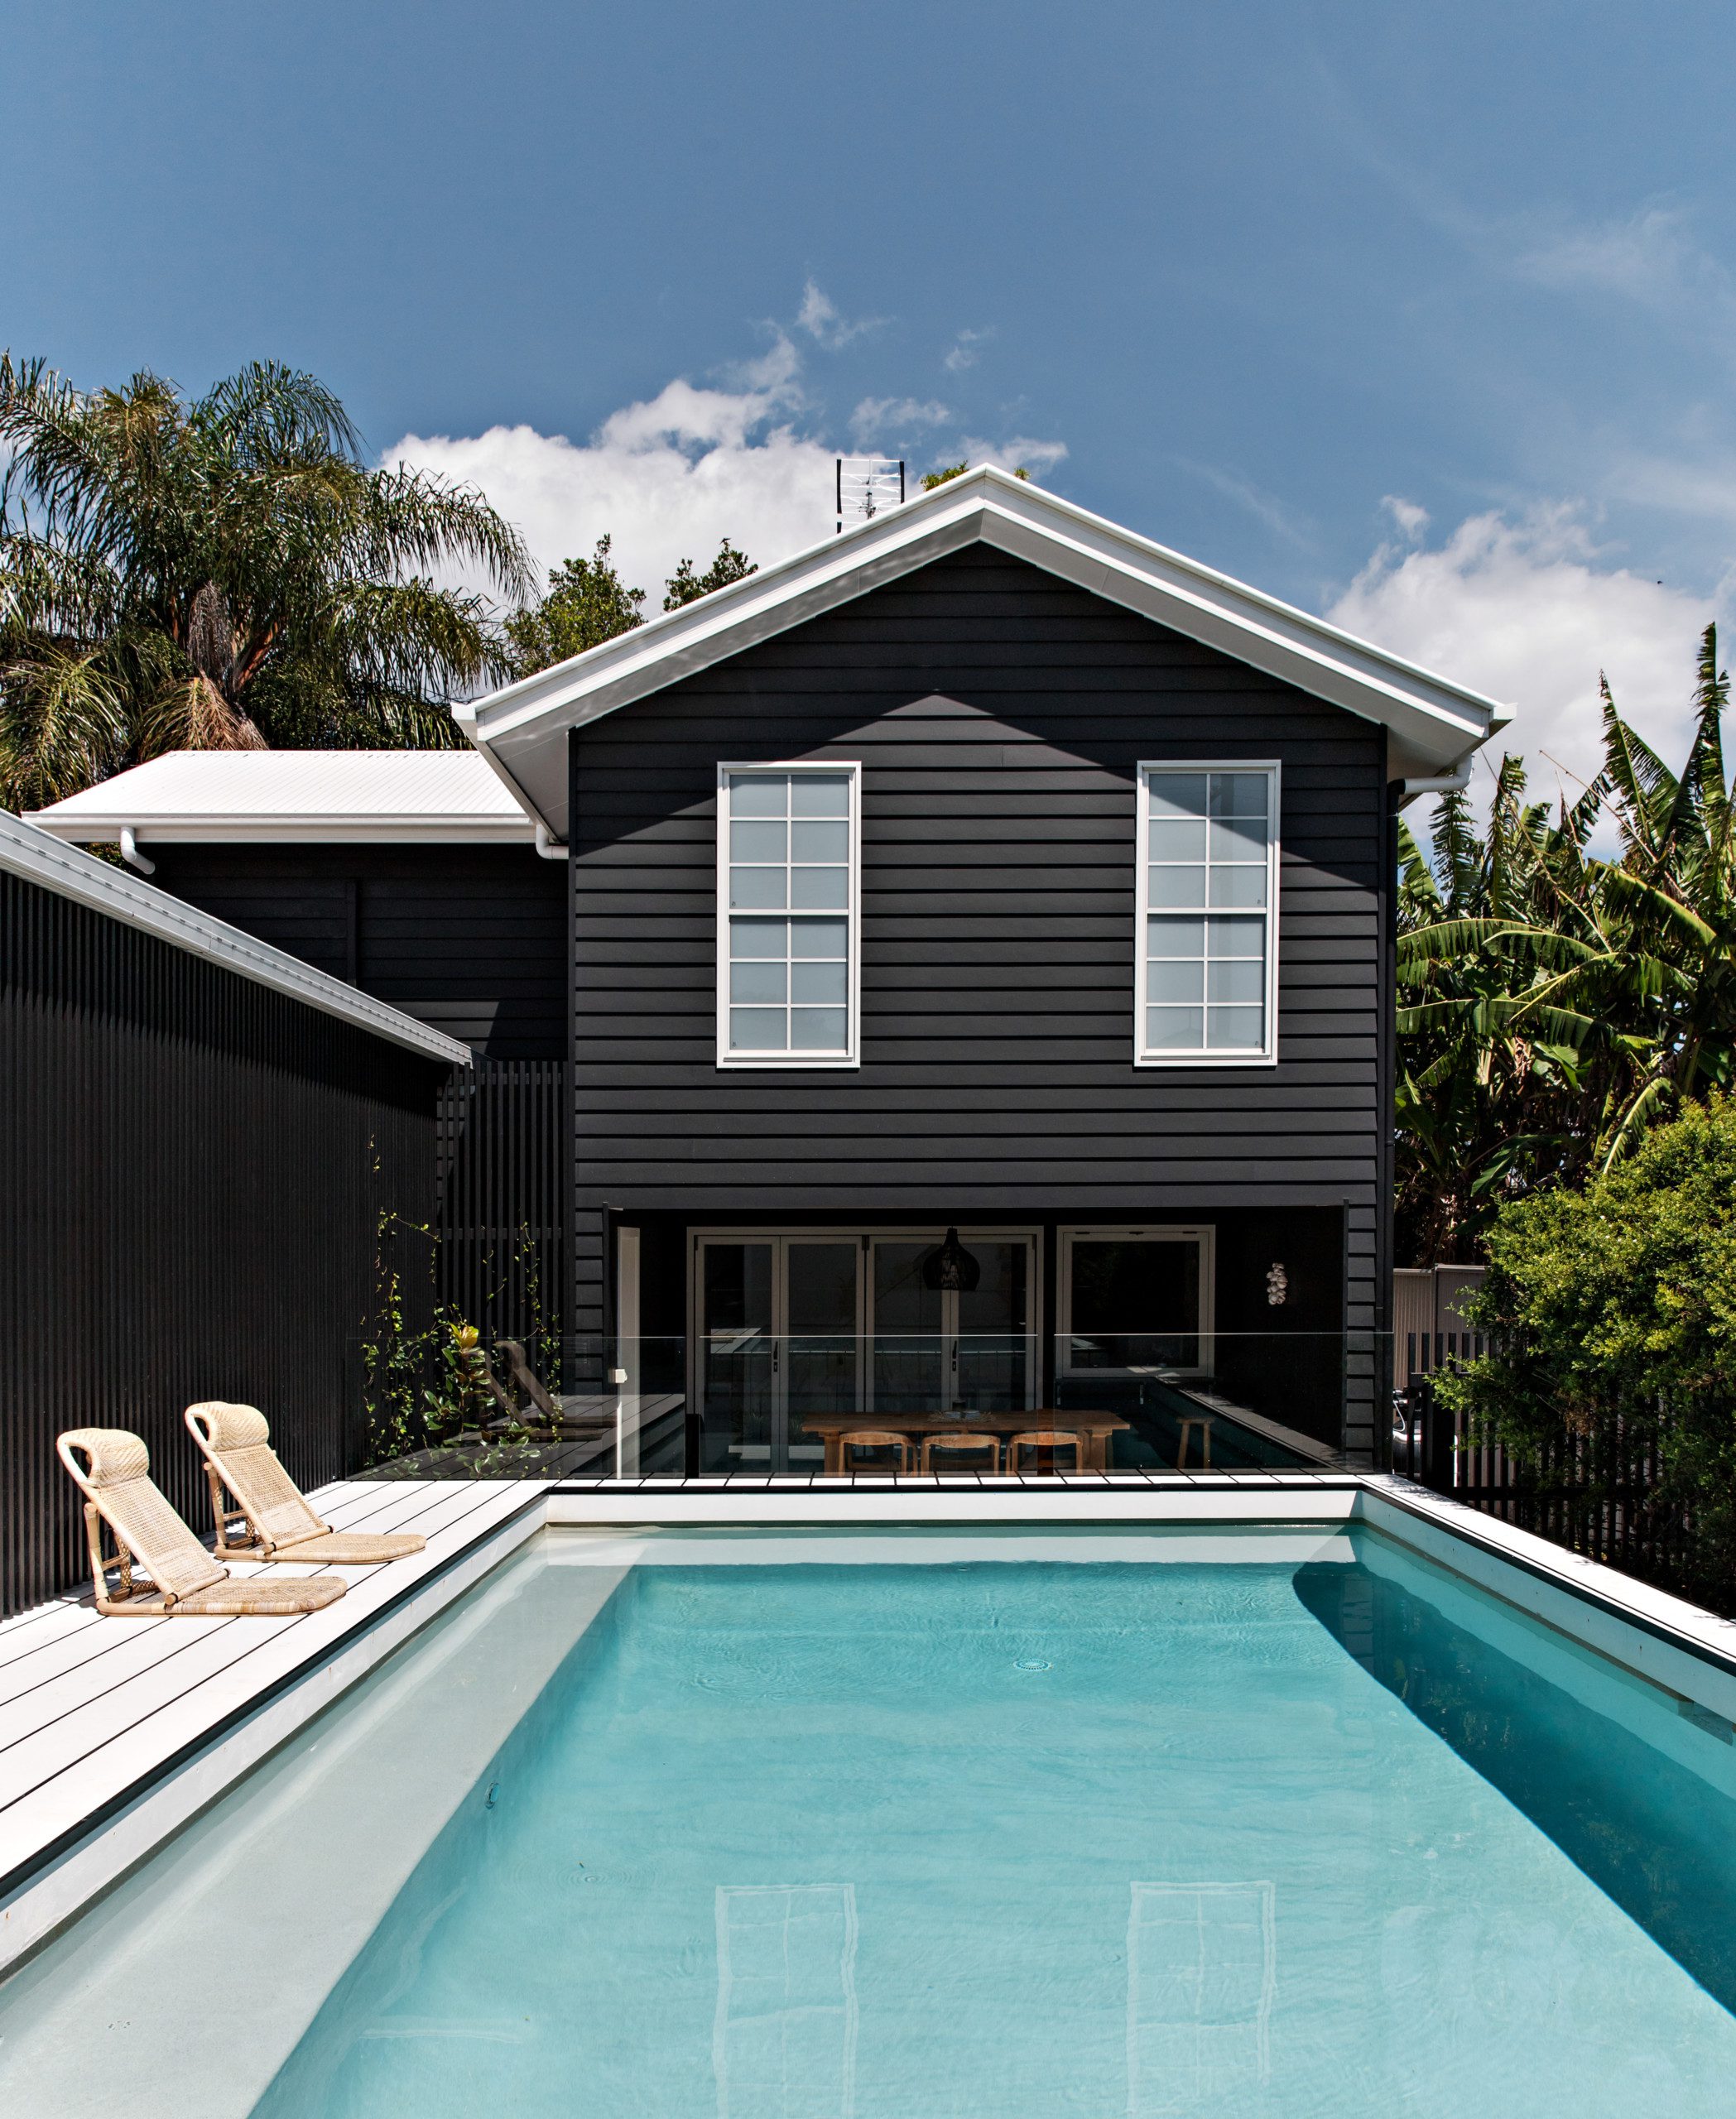 The Pool & Palm House